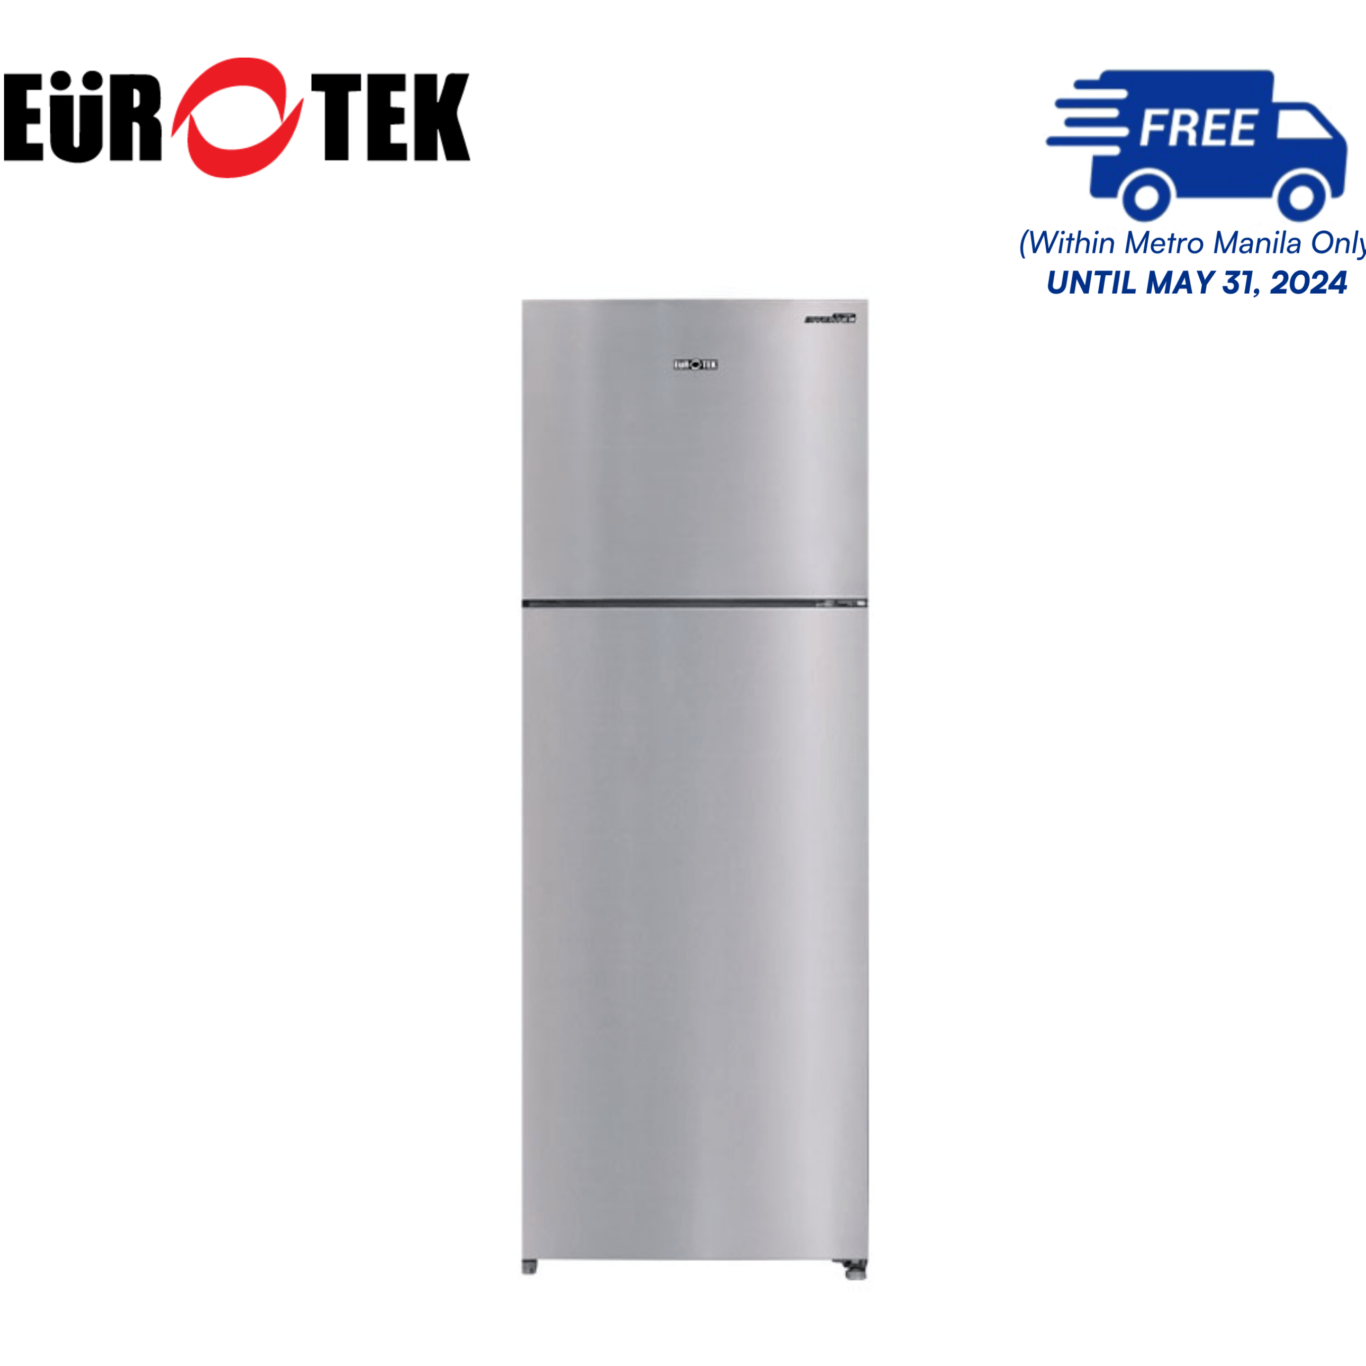 Eurotek ER265IN